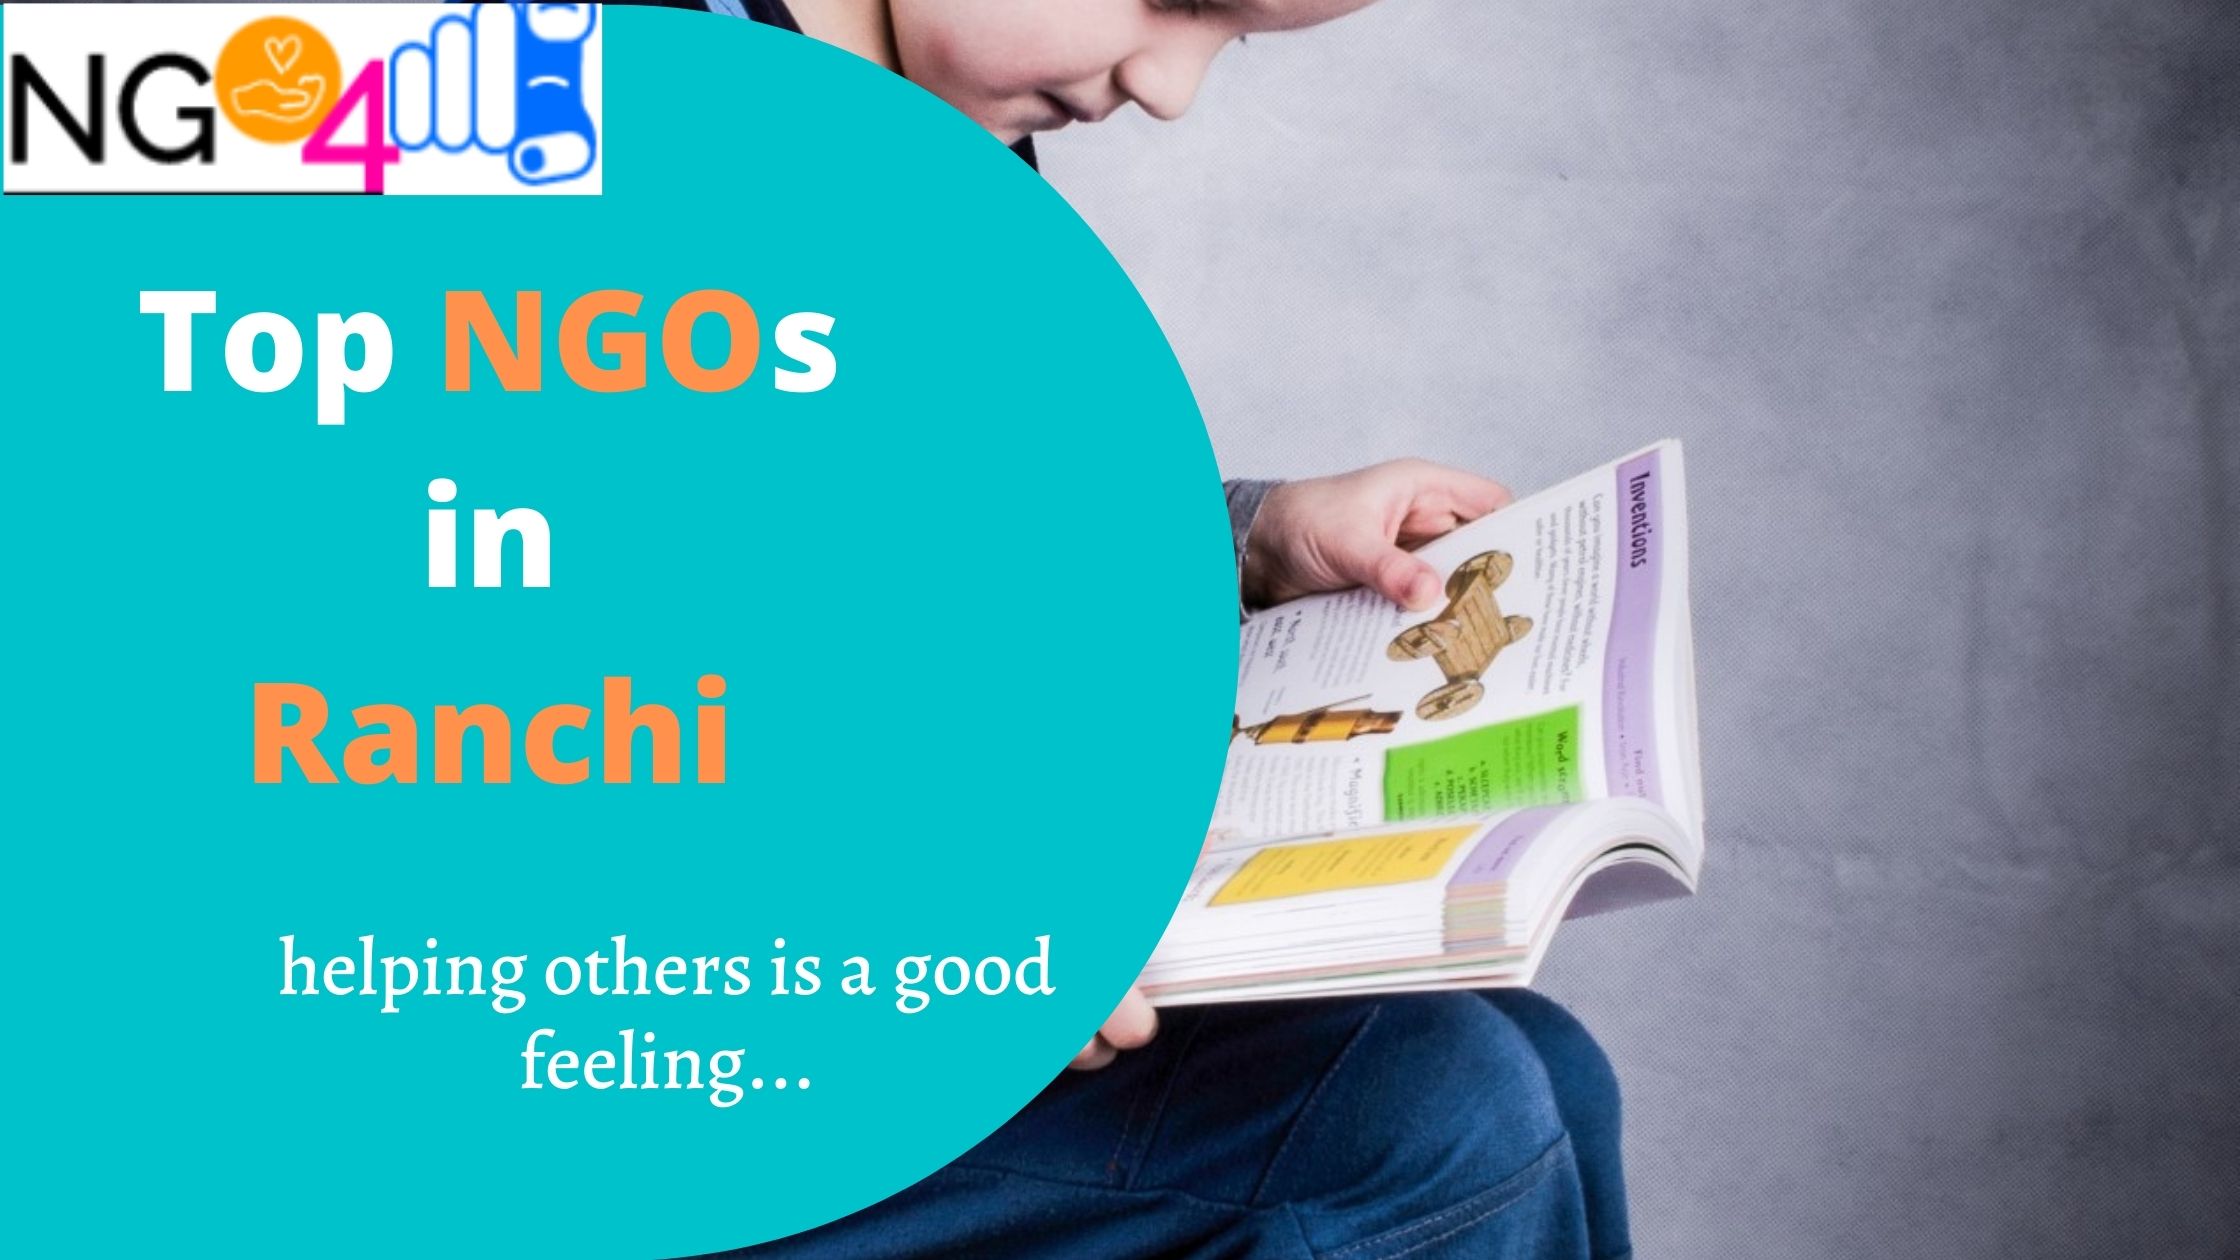 Find Top NGOs In Ranchi- Volunteering Non-profit Organizations